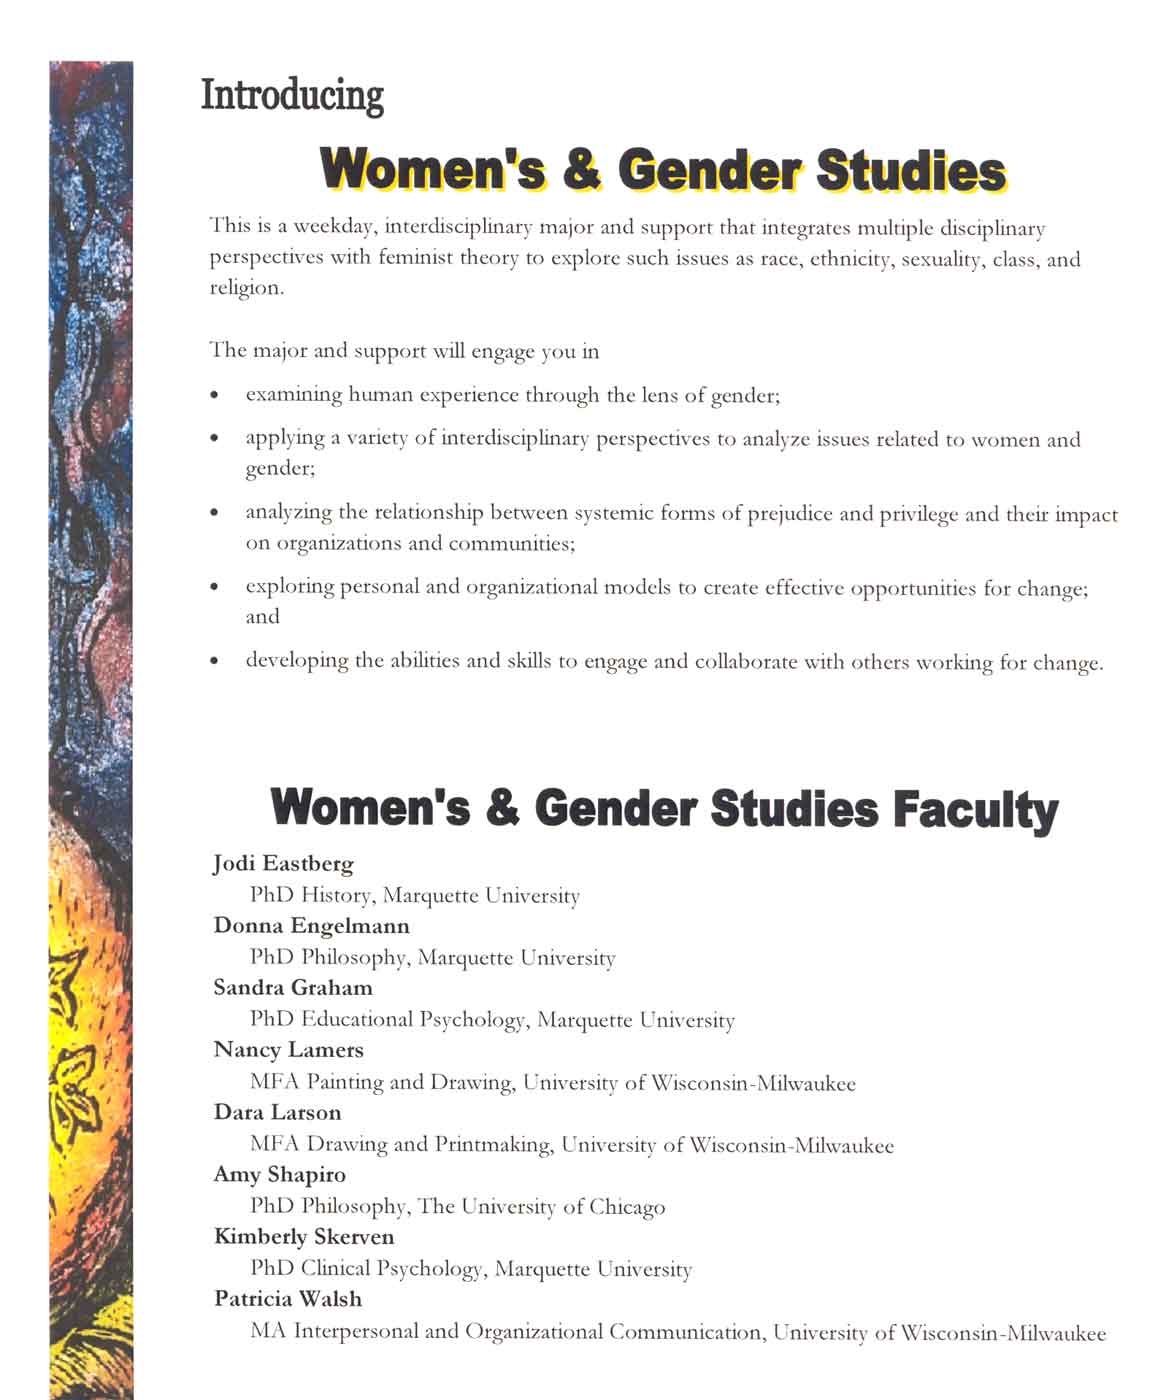 Information on Alverno's new Women's and Gender Studies Major